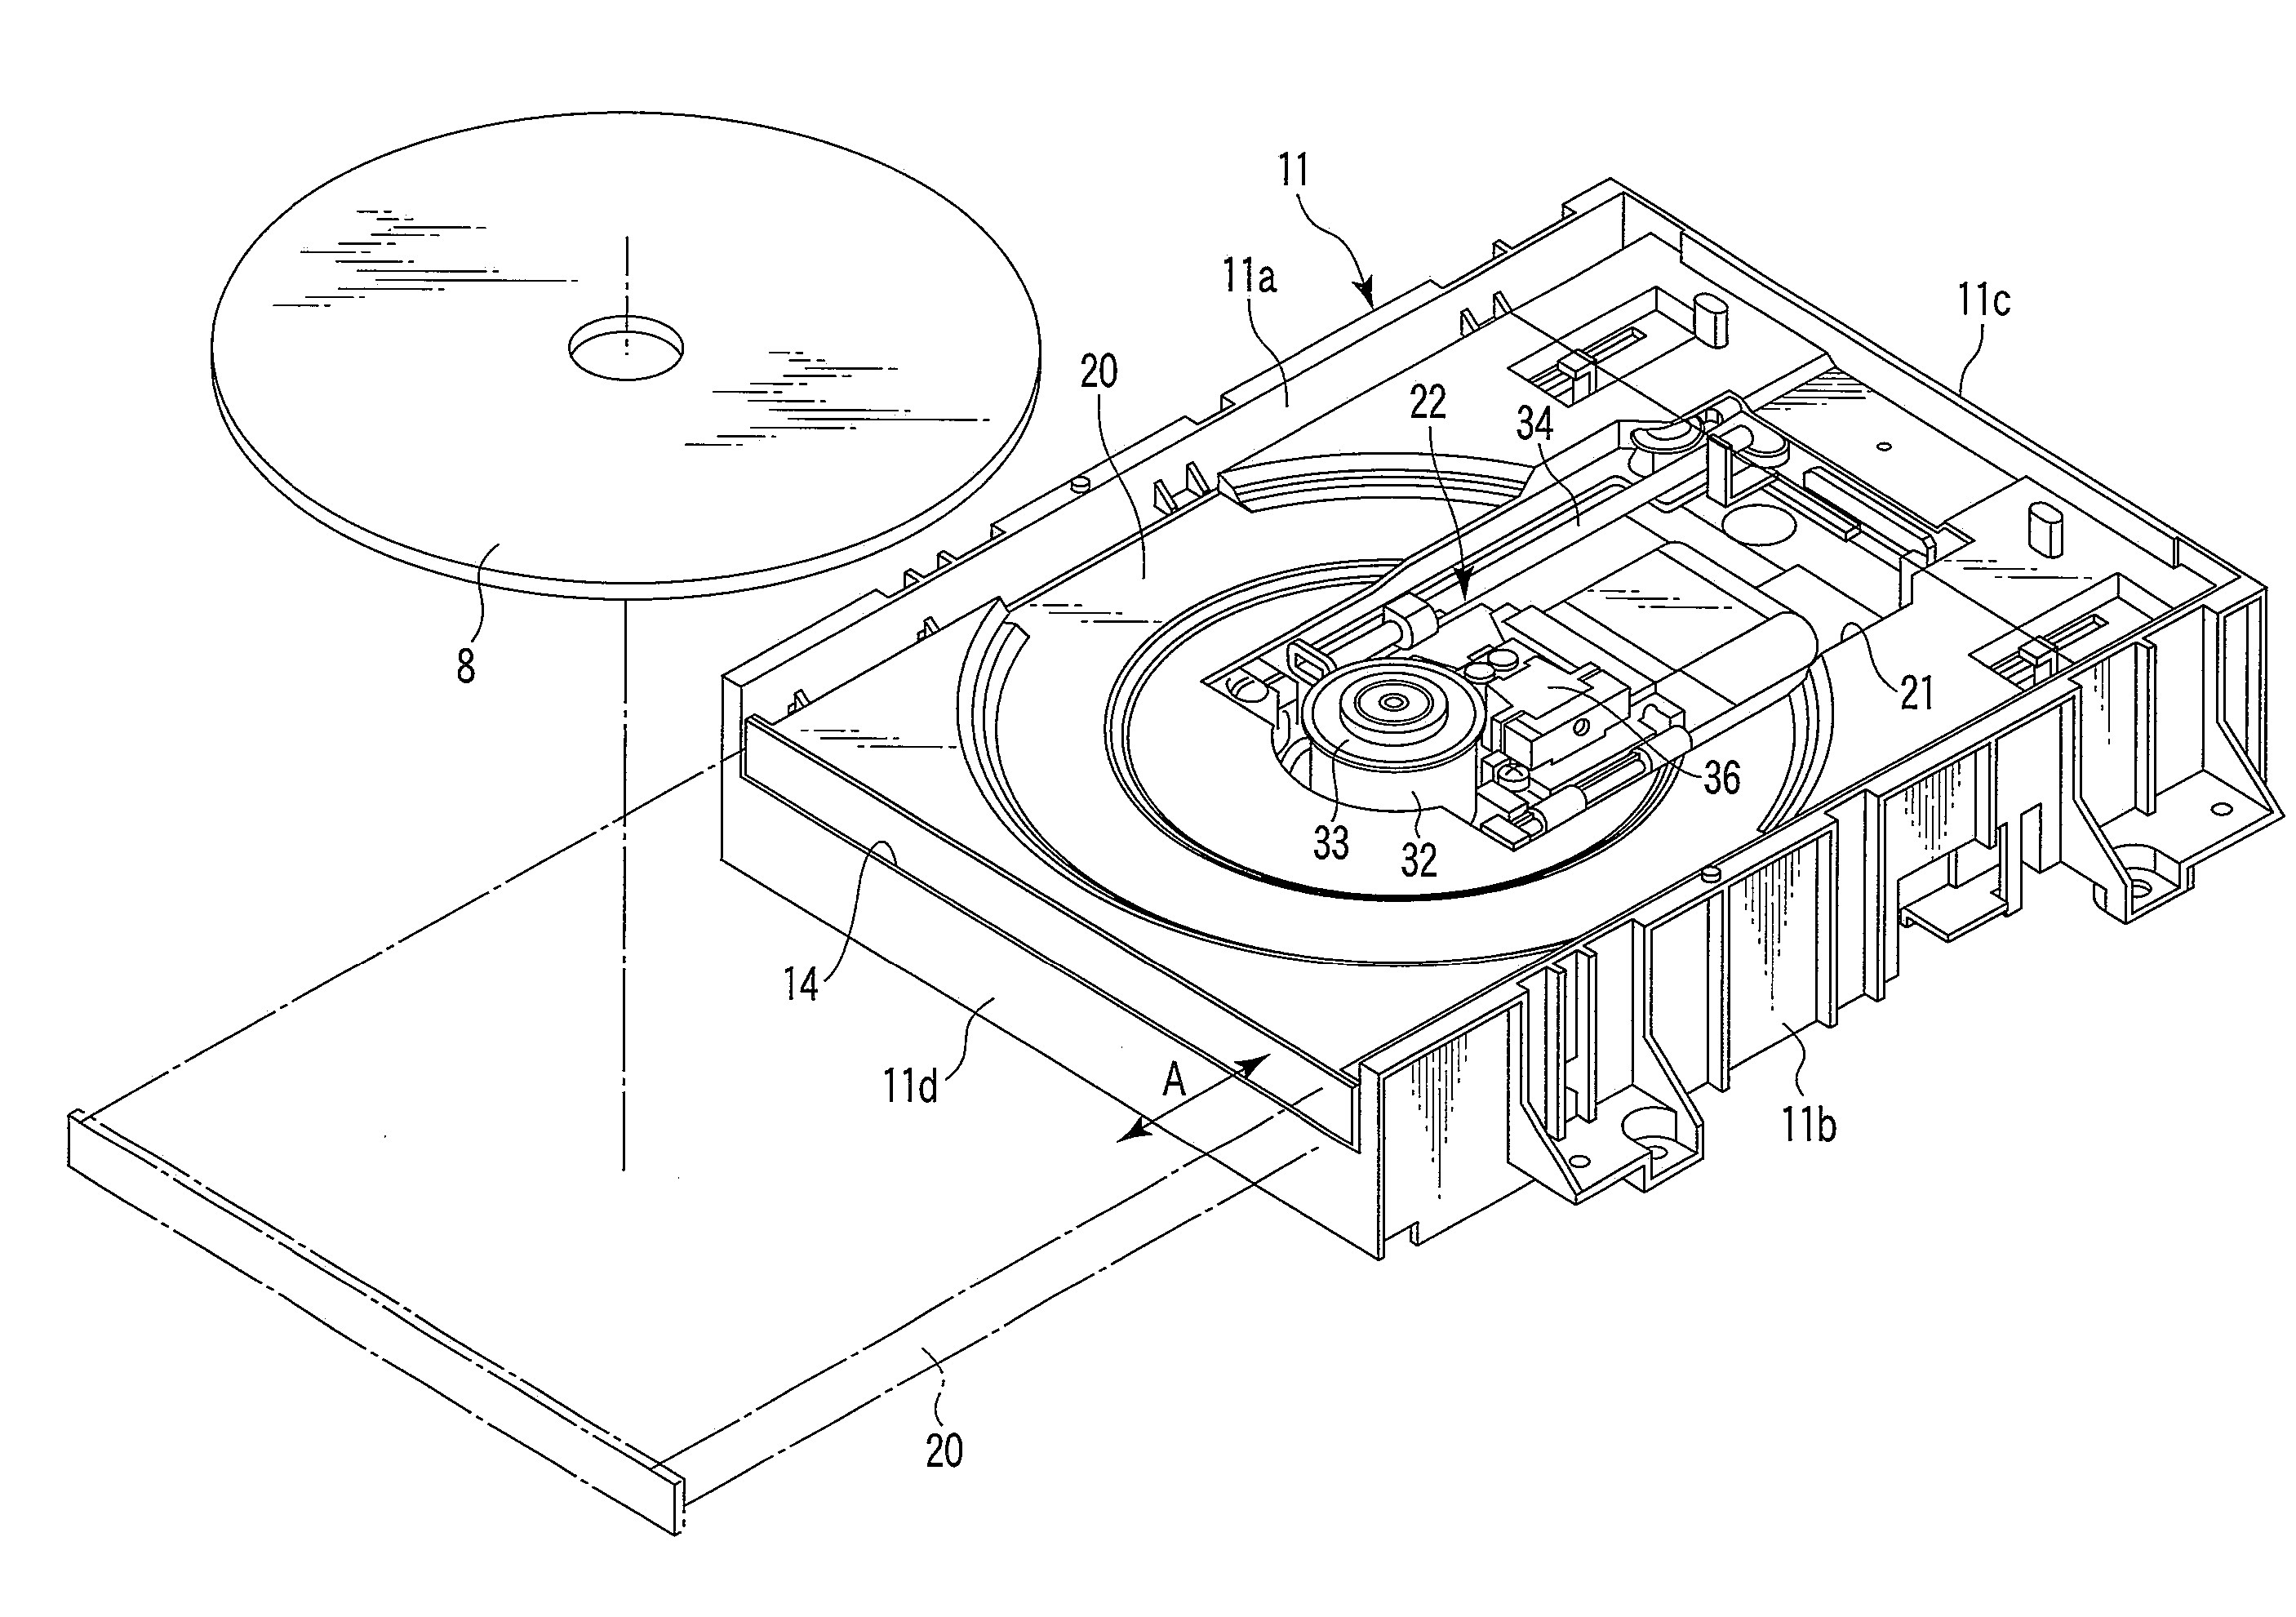 Disc drive apparatus